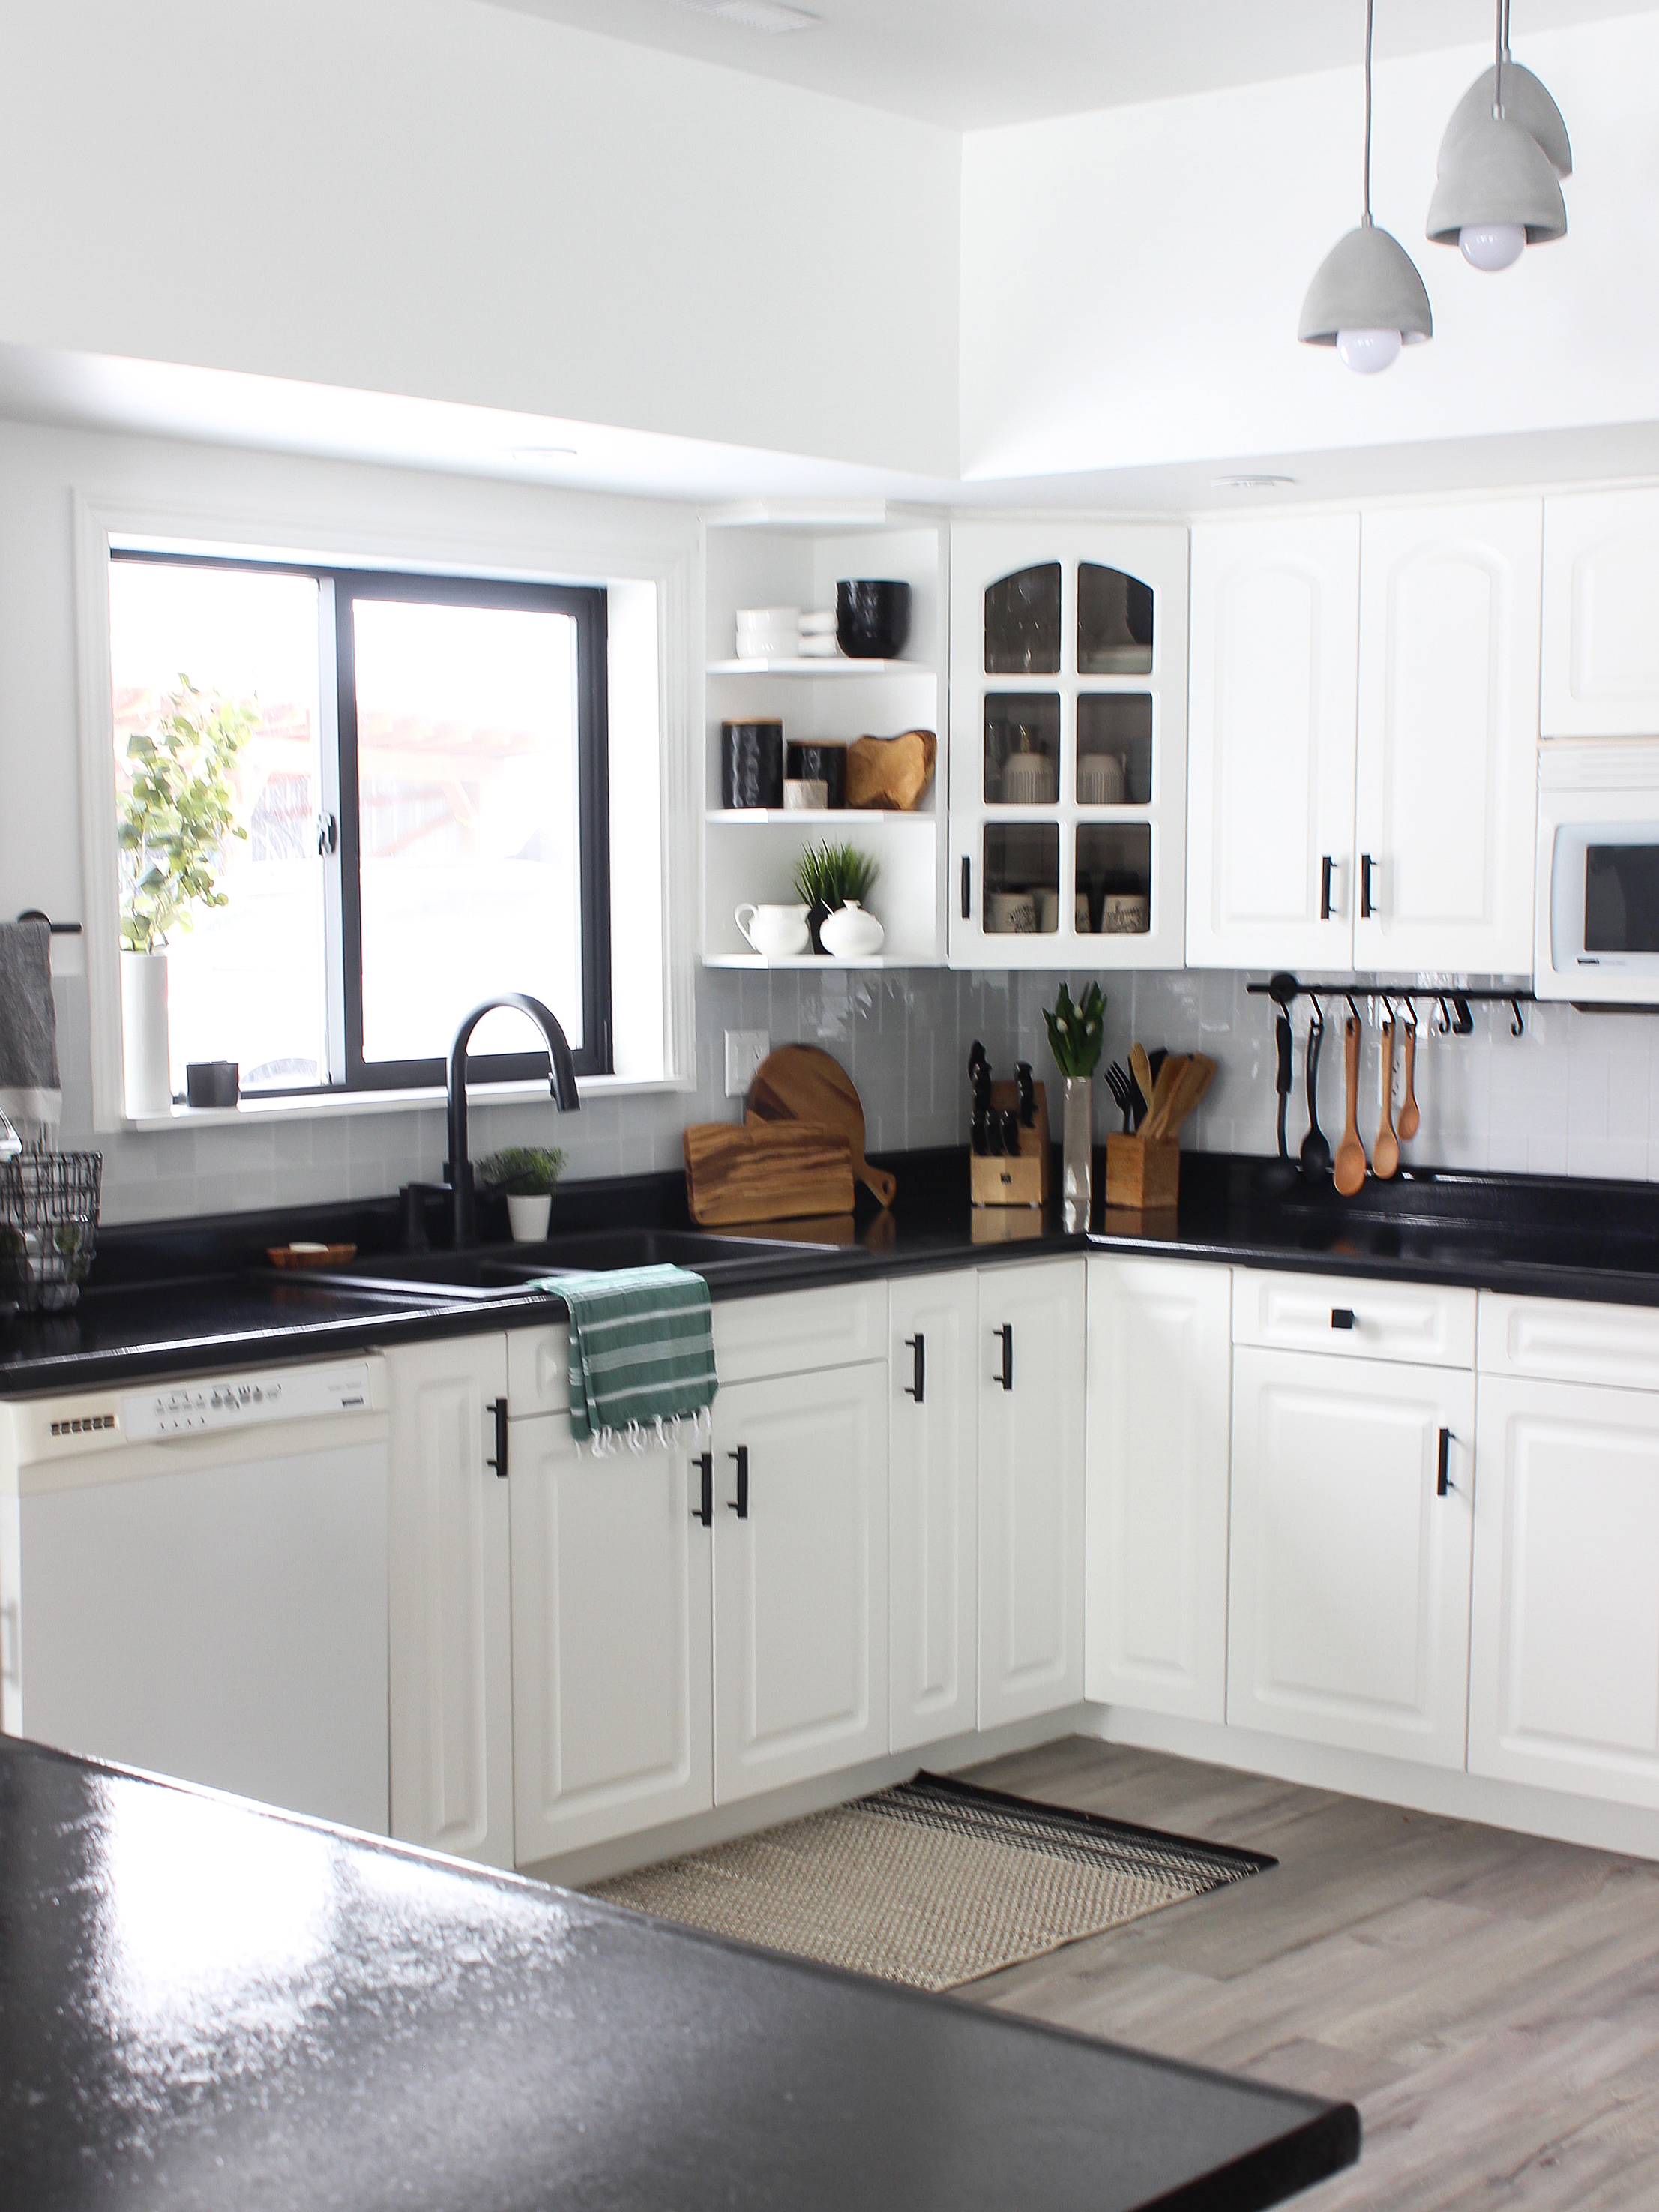 White Kitchen Cabinets With Black Countertops Are The Next Big Reno Trend